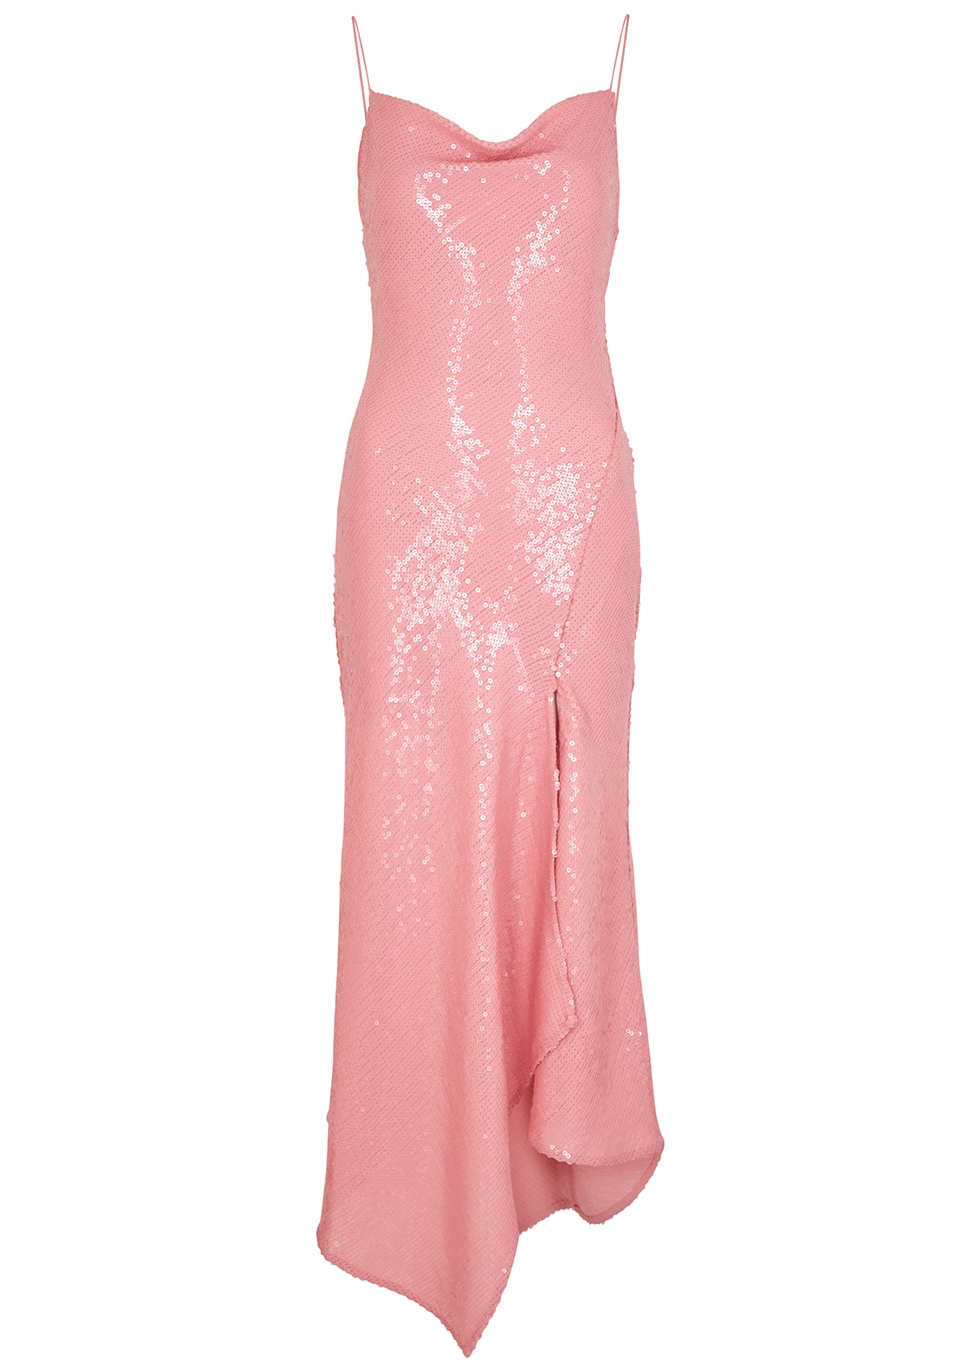 Harmony pink sequin-embellished midi dress